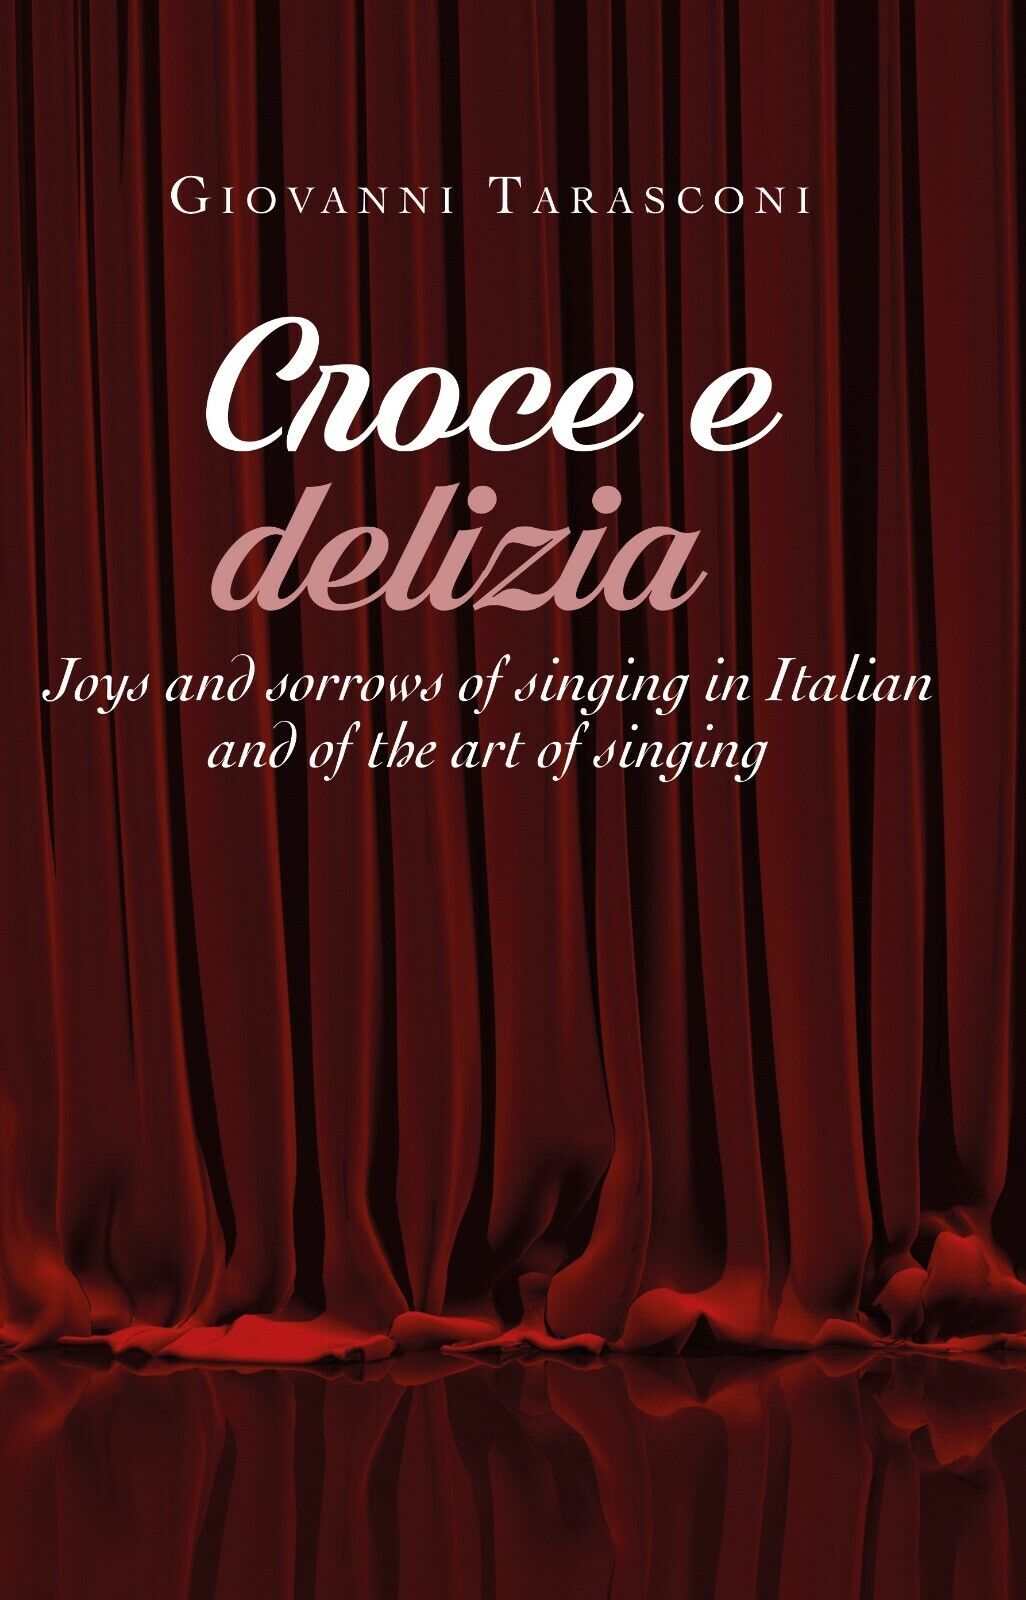 CROCE E DELIZIA Joys and sorrows of singing in Italian - Tarasconi 2019 - ER libro usato